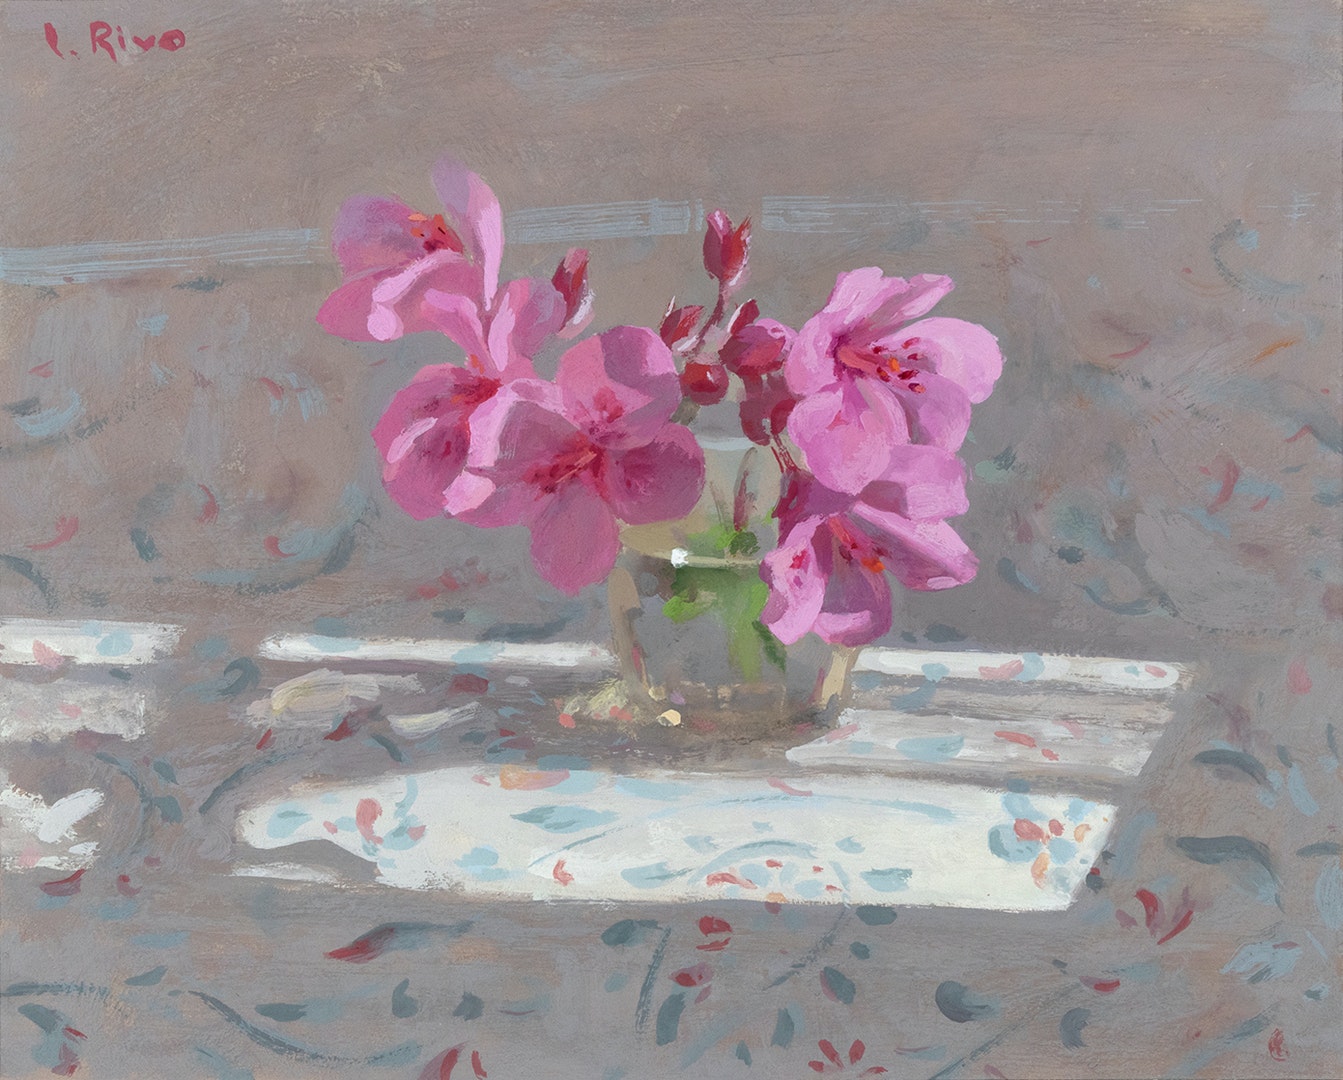 'Wild geranium in sunlight', Lena Rivo, Gouache, 16 x 20 cm